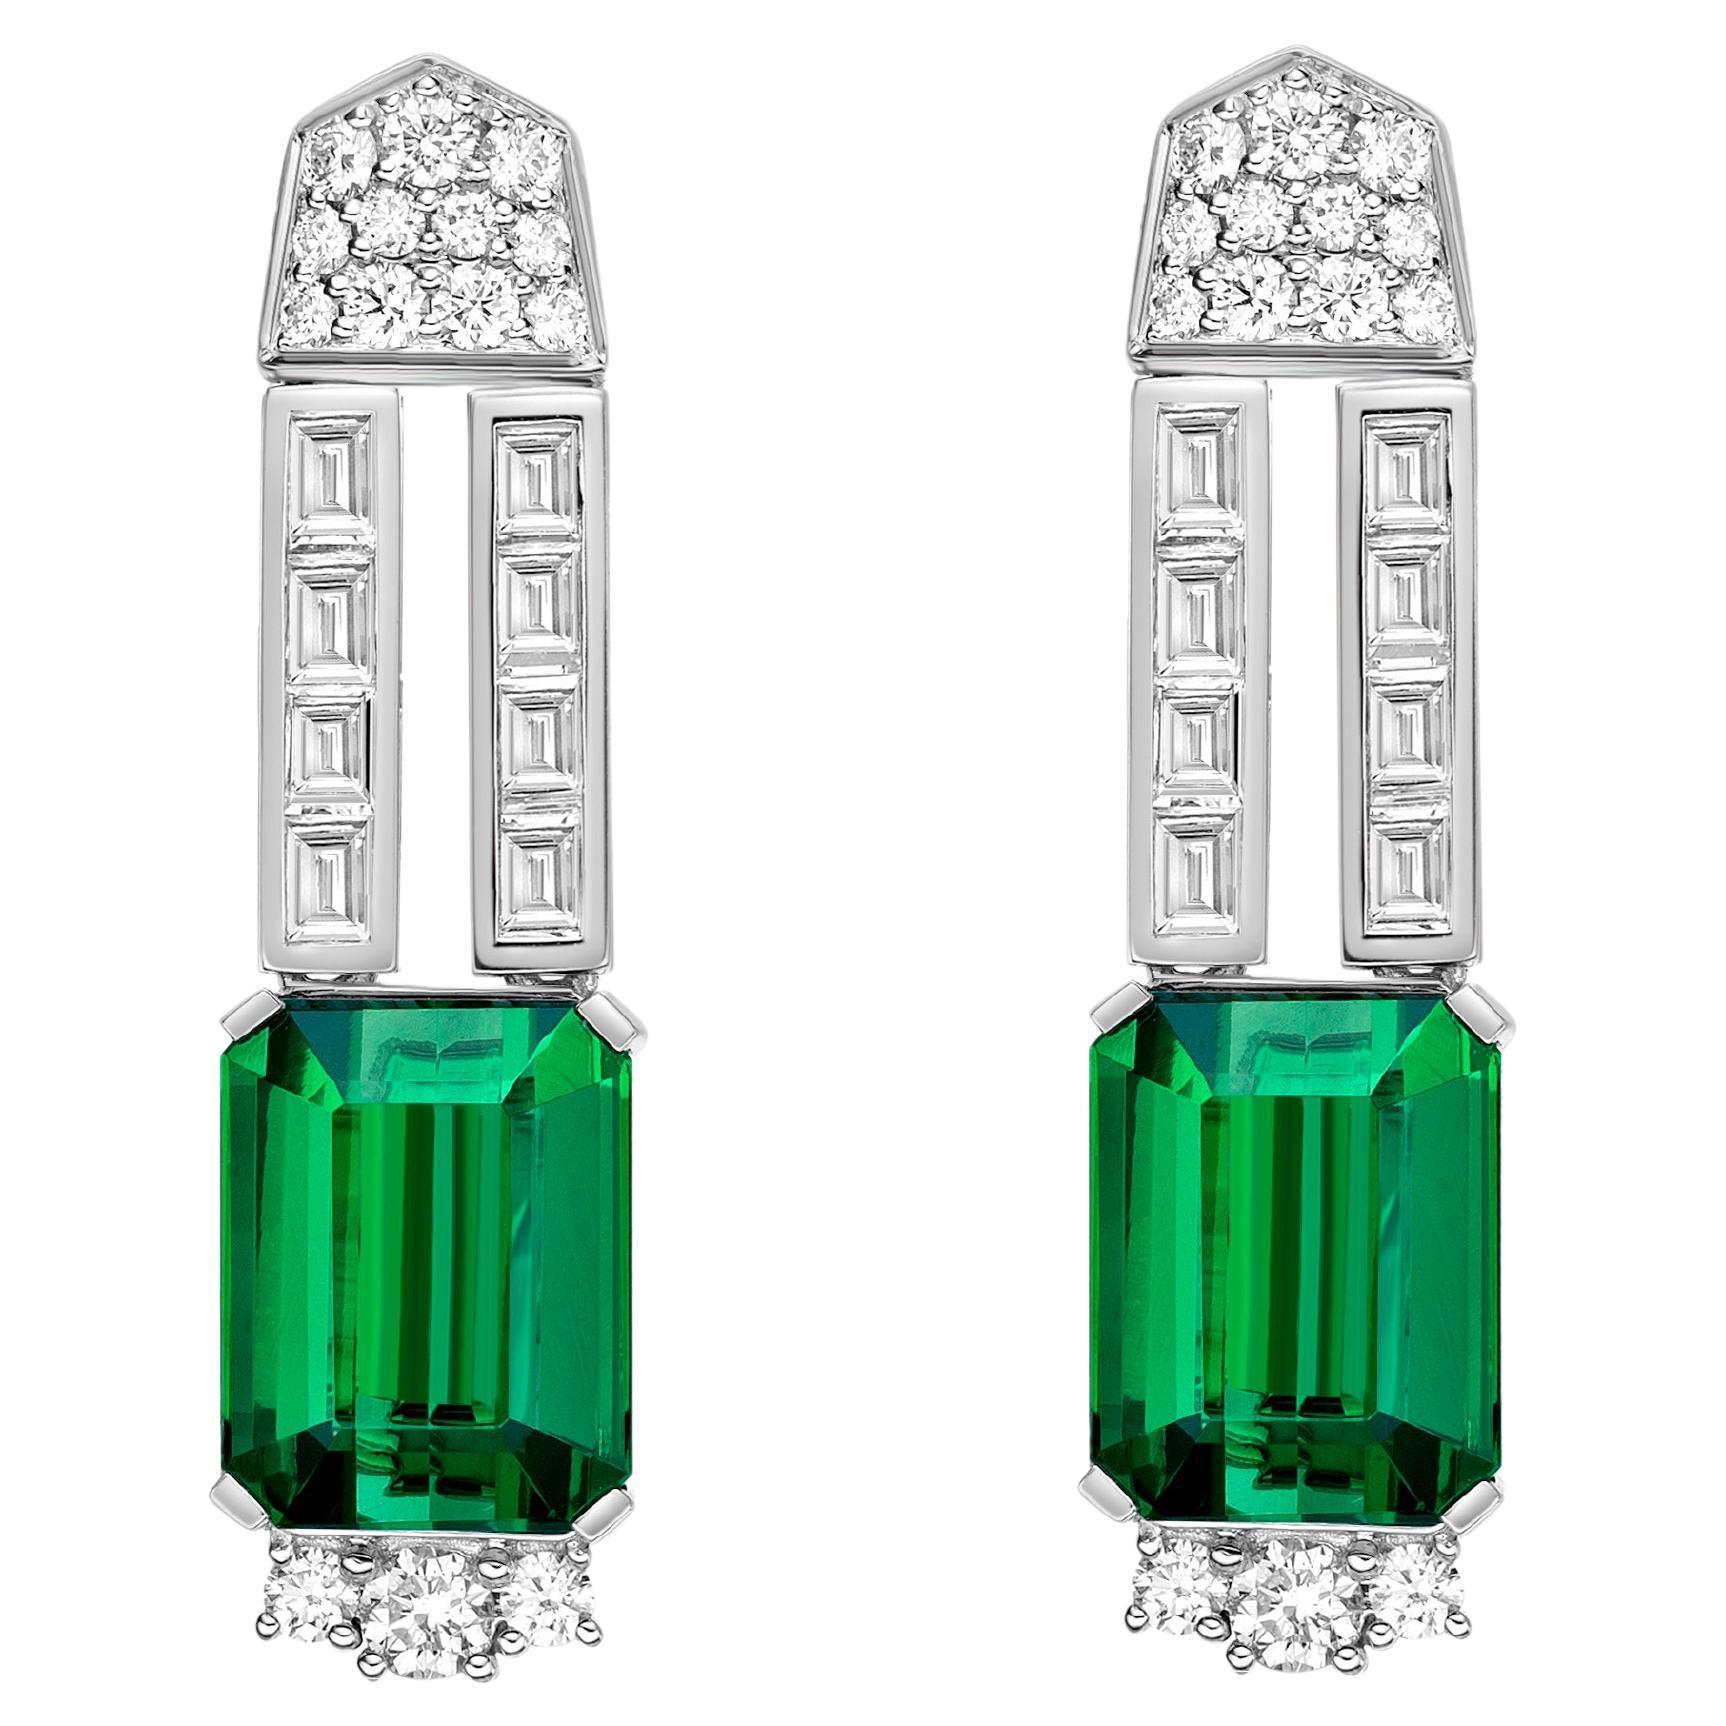 13.13 Carat Green Tourmaline Drop Earrings in 18Karat White Gold with Diamond. For Sale